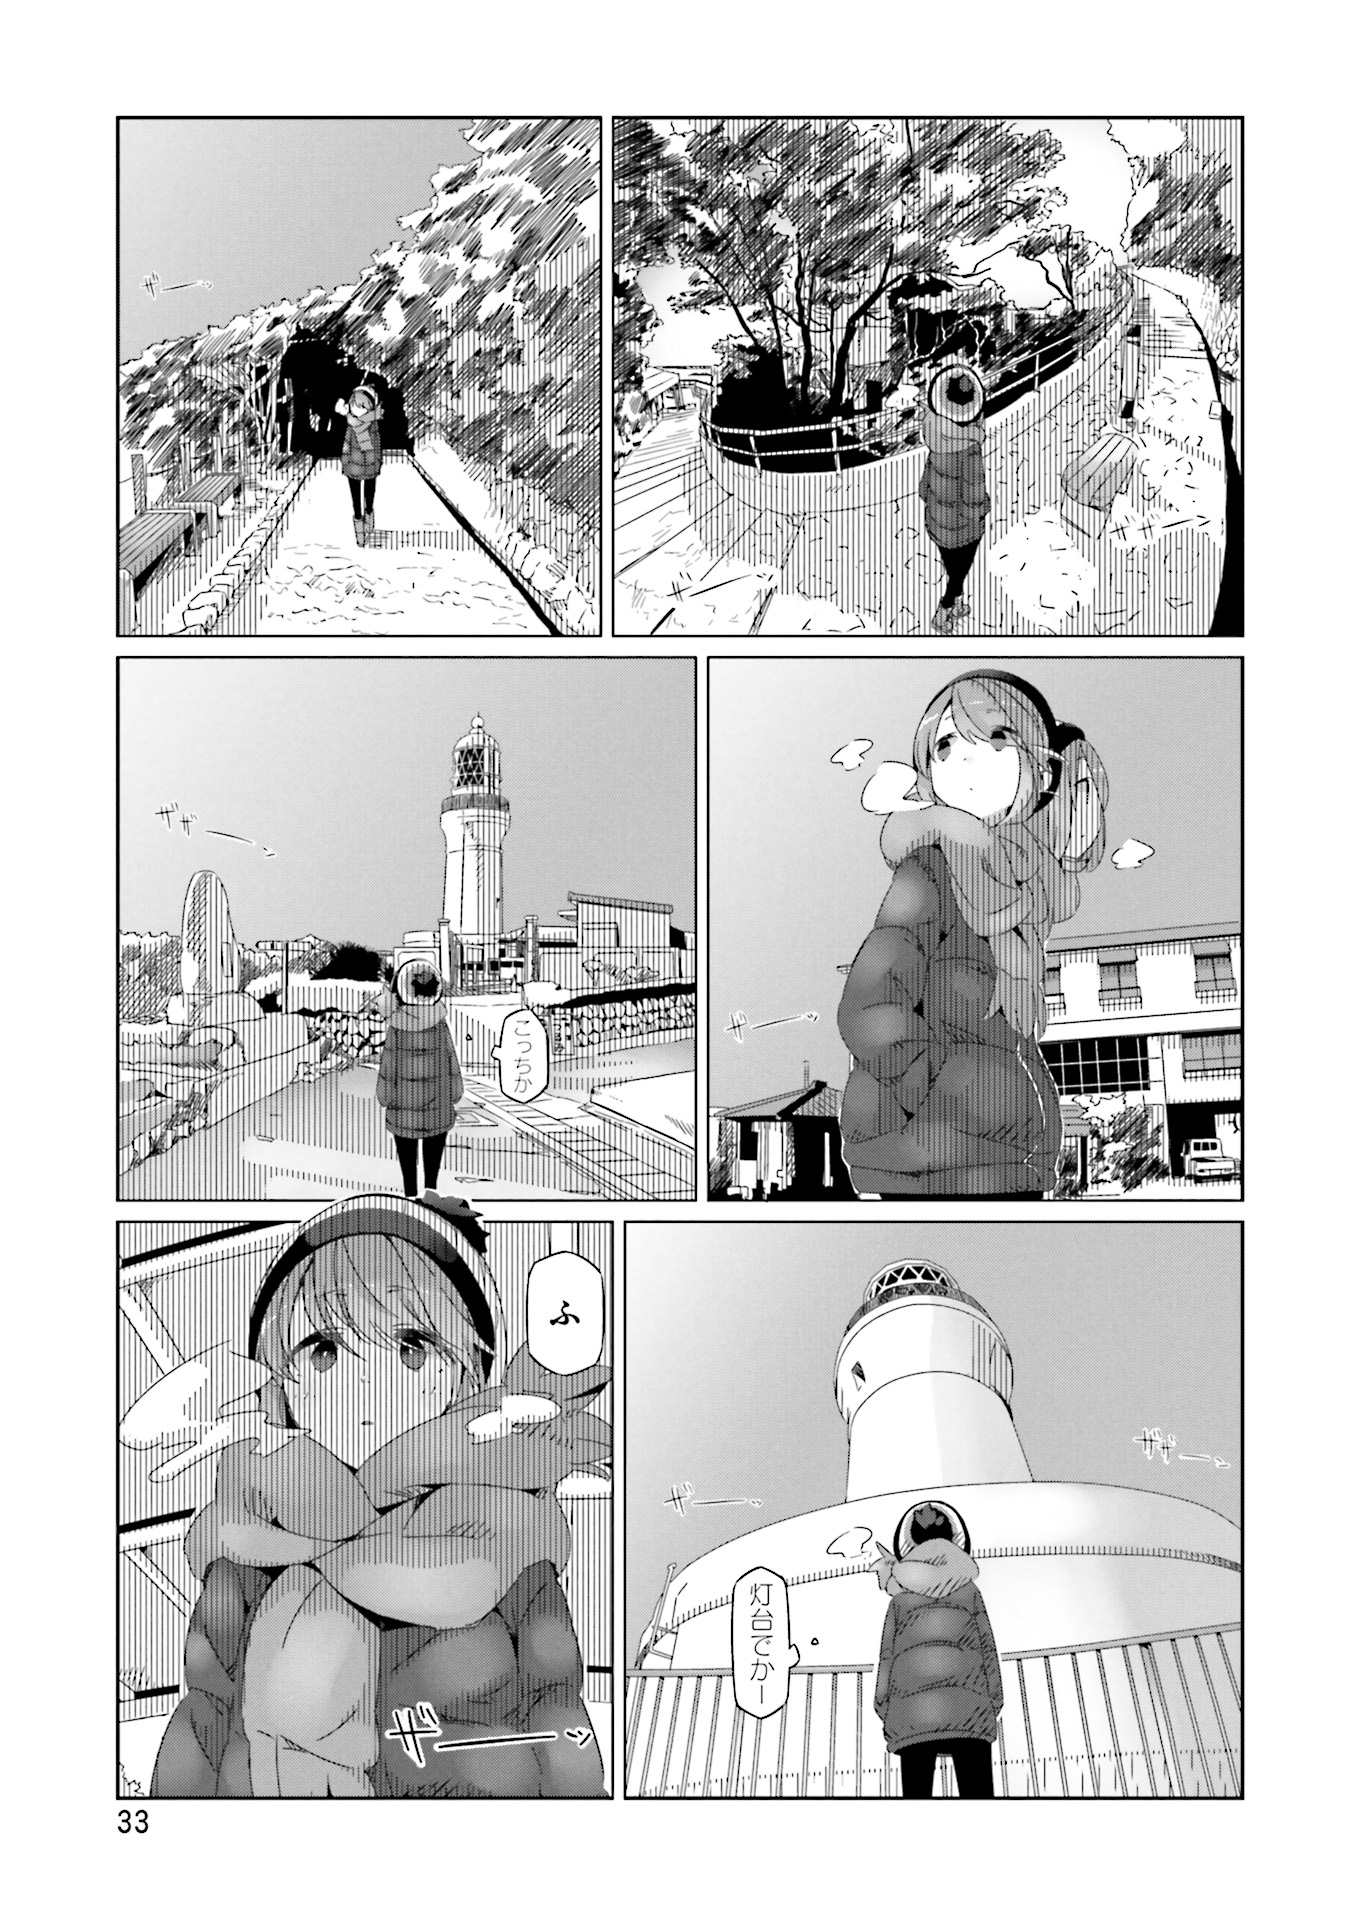 Yuru Camp - Chapter 25 - Page 1